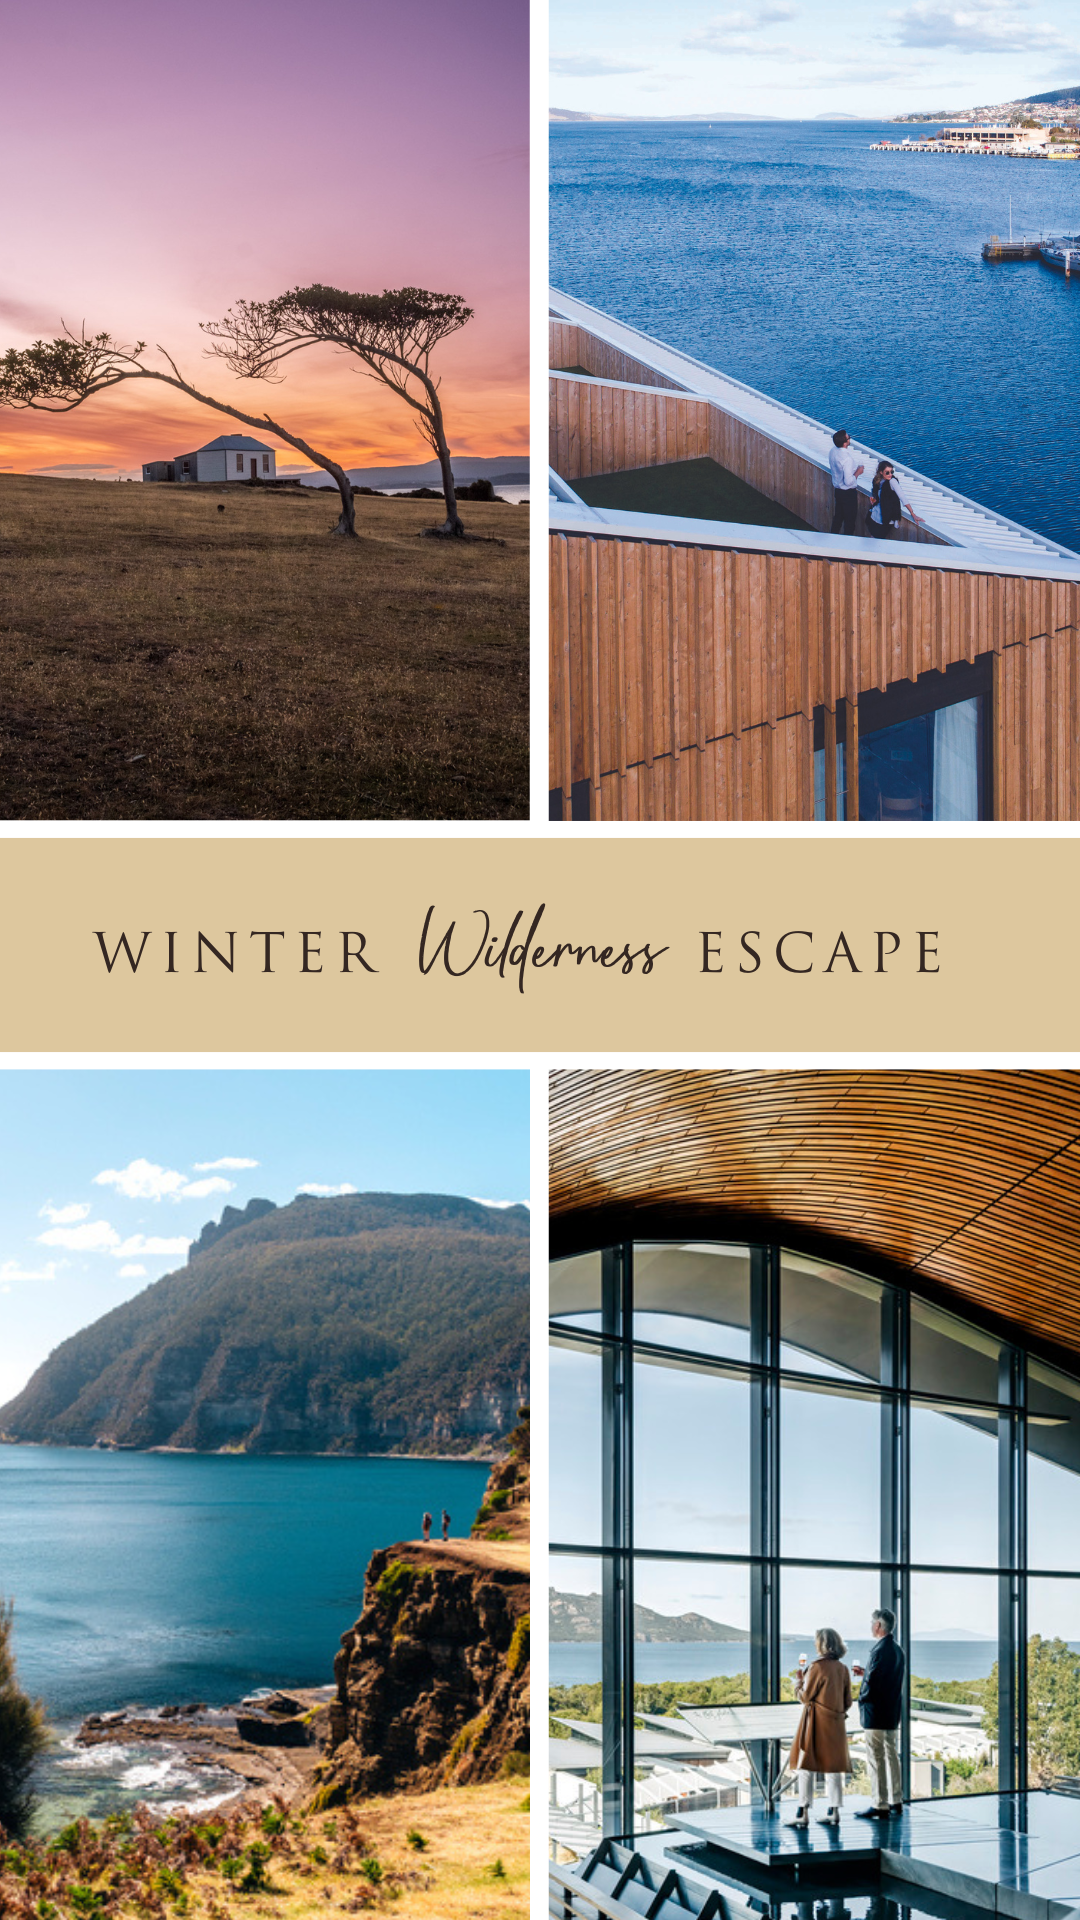 Winter Wilderness Escape